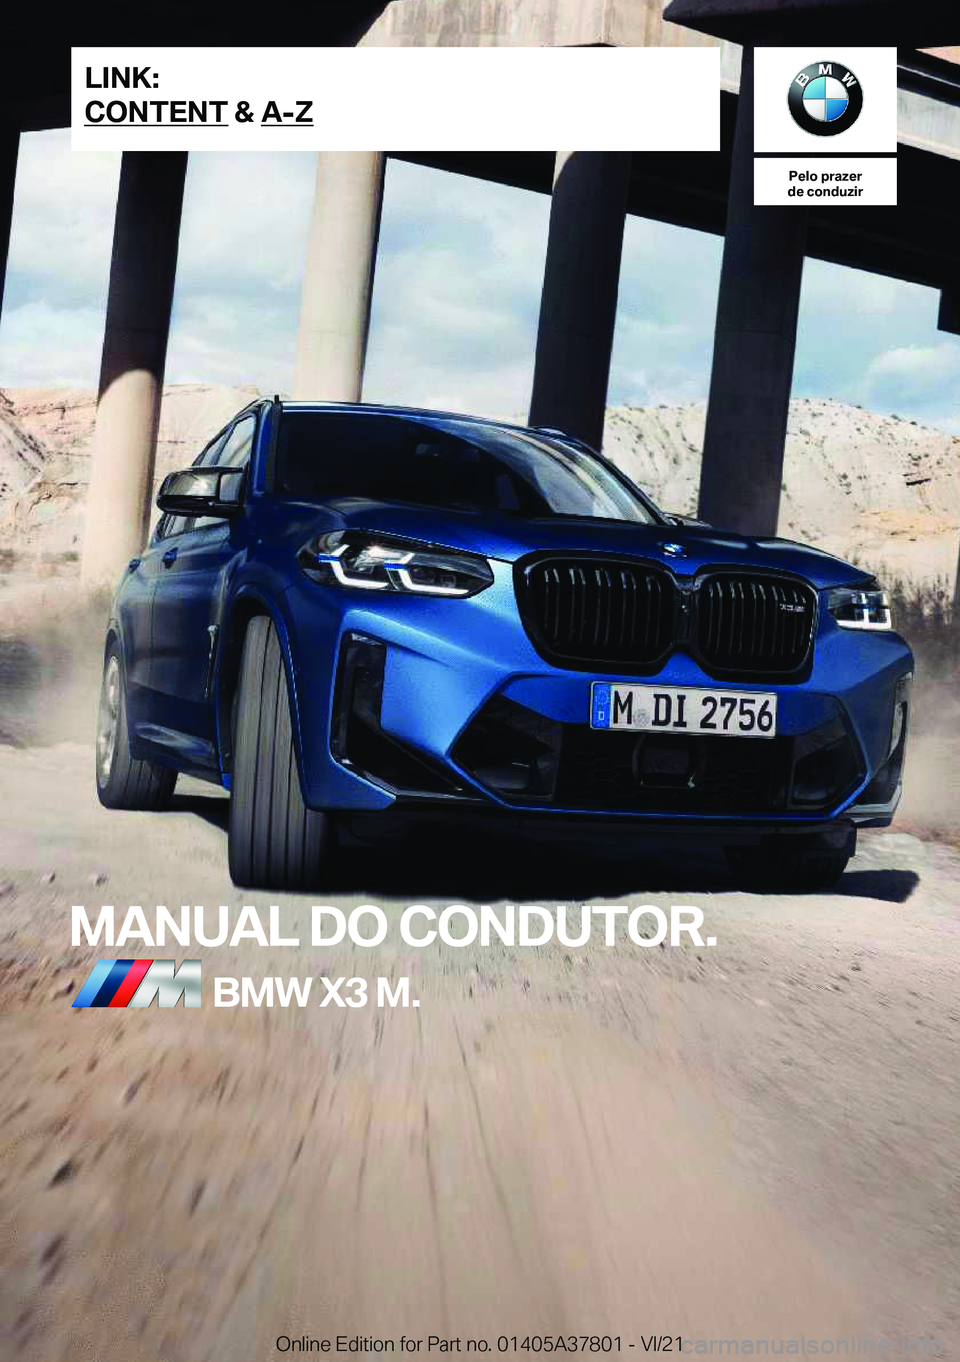 BMW X3 M 2022  Manual do condutor (in Portuguese) �P�e�l�o��p�r�a�z�e�r
�d�e��c�o�n�d�u�z�i�r
�M�A�N�U�A�L��D�O��C�O�N�D�U�T�O�R�.�B�M�W��X�3��M�.�L�I�N�K�:
�C�O�N�T�E�N�T��&��A�-�Z�O�n�l�i�n�e��E�d�i�t�i�o�n��f�o�r��P�a�r�t��n�o�.��0�1�